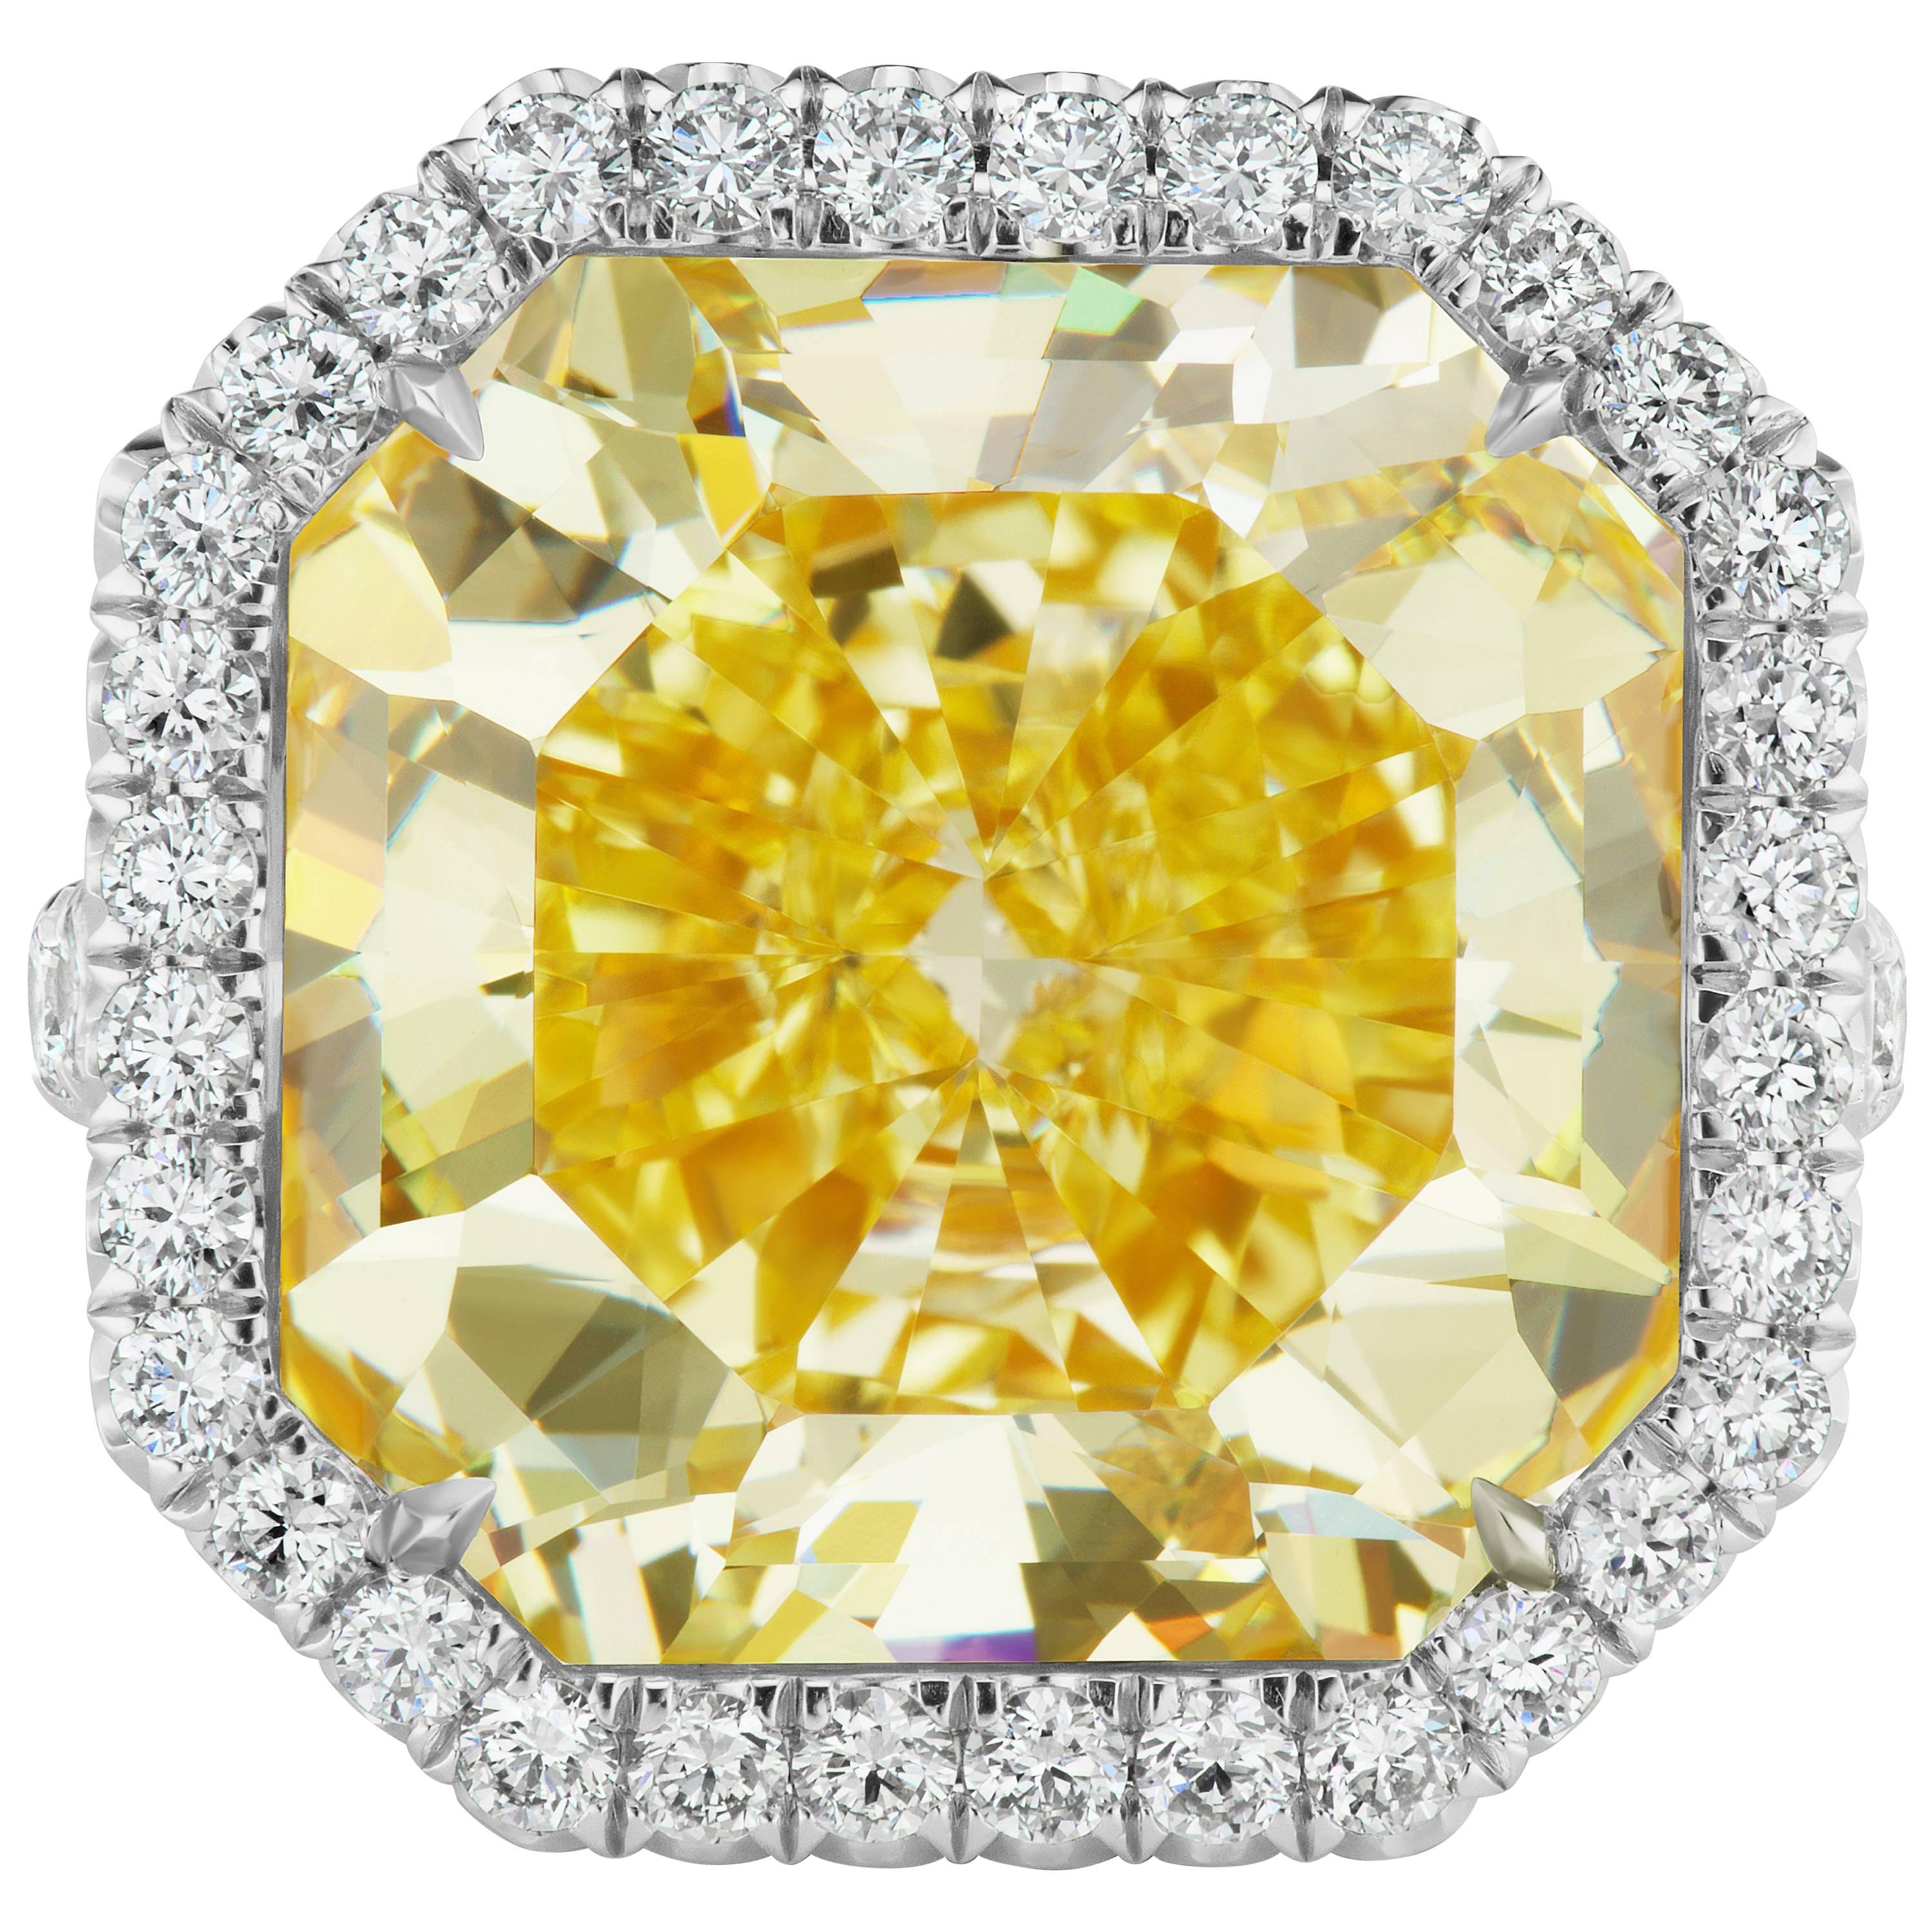 Scarselli 15 Carat Fancy Intense Yellow Diamond Ring Internally Flawless GIA